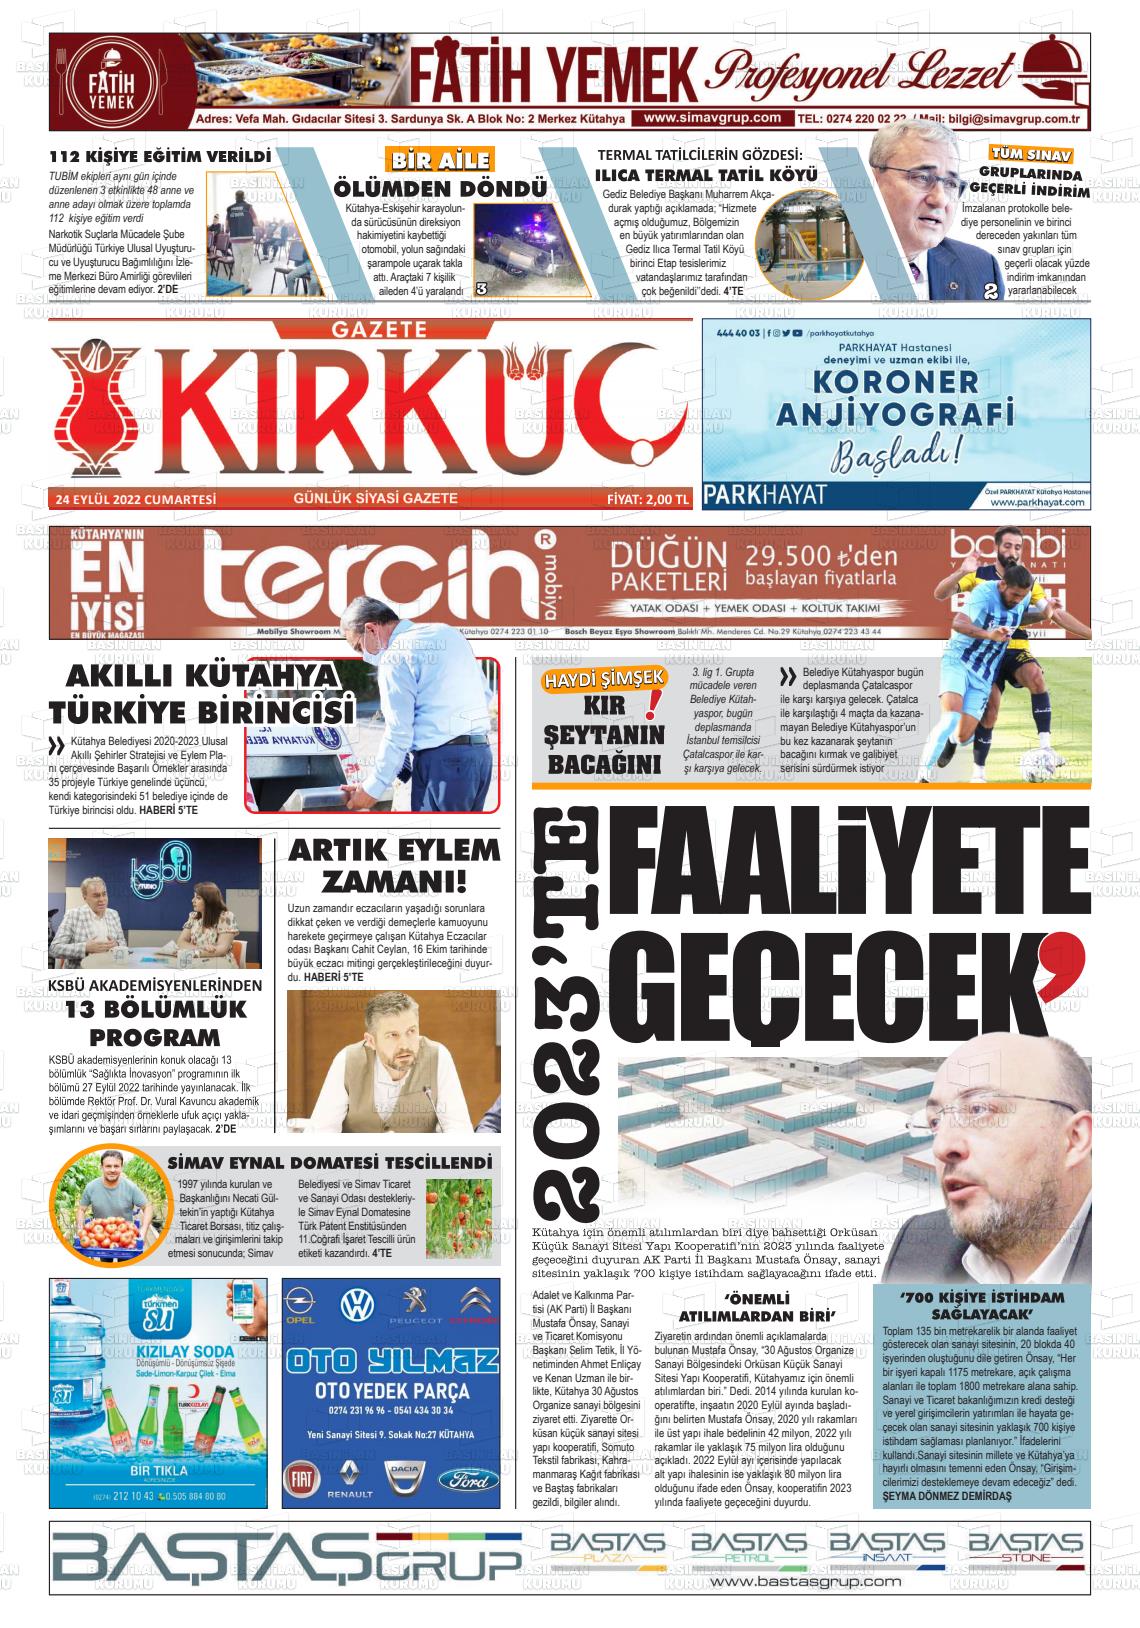 24 Eylül 2022 Gazete Kırküç Gazete Manşeti